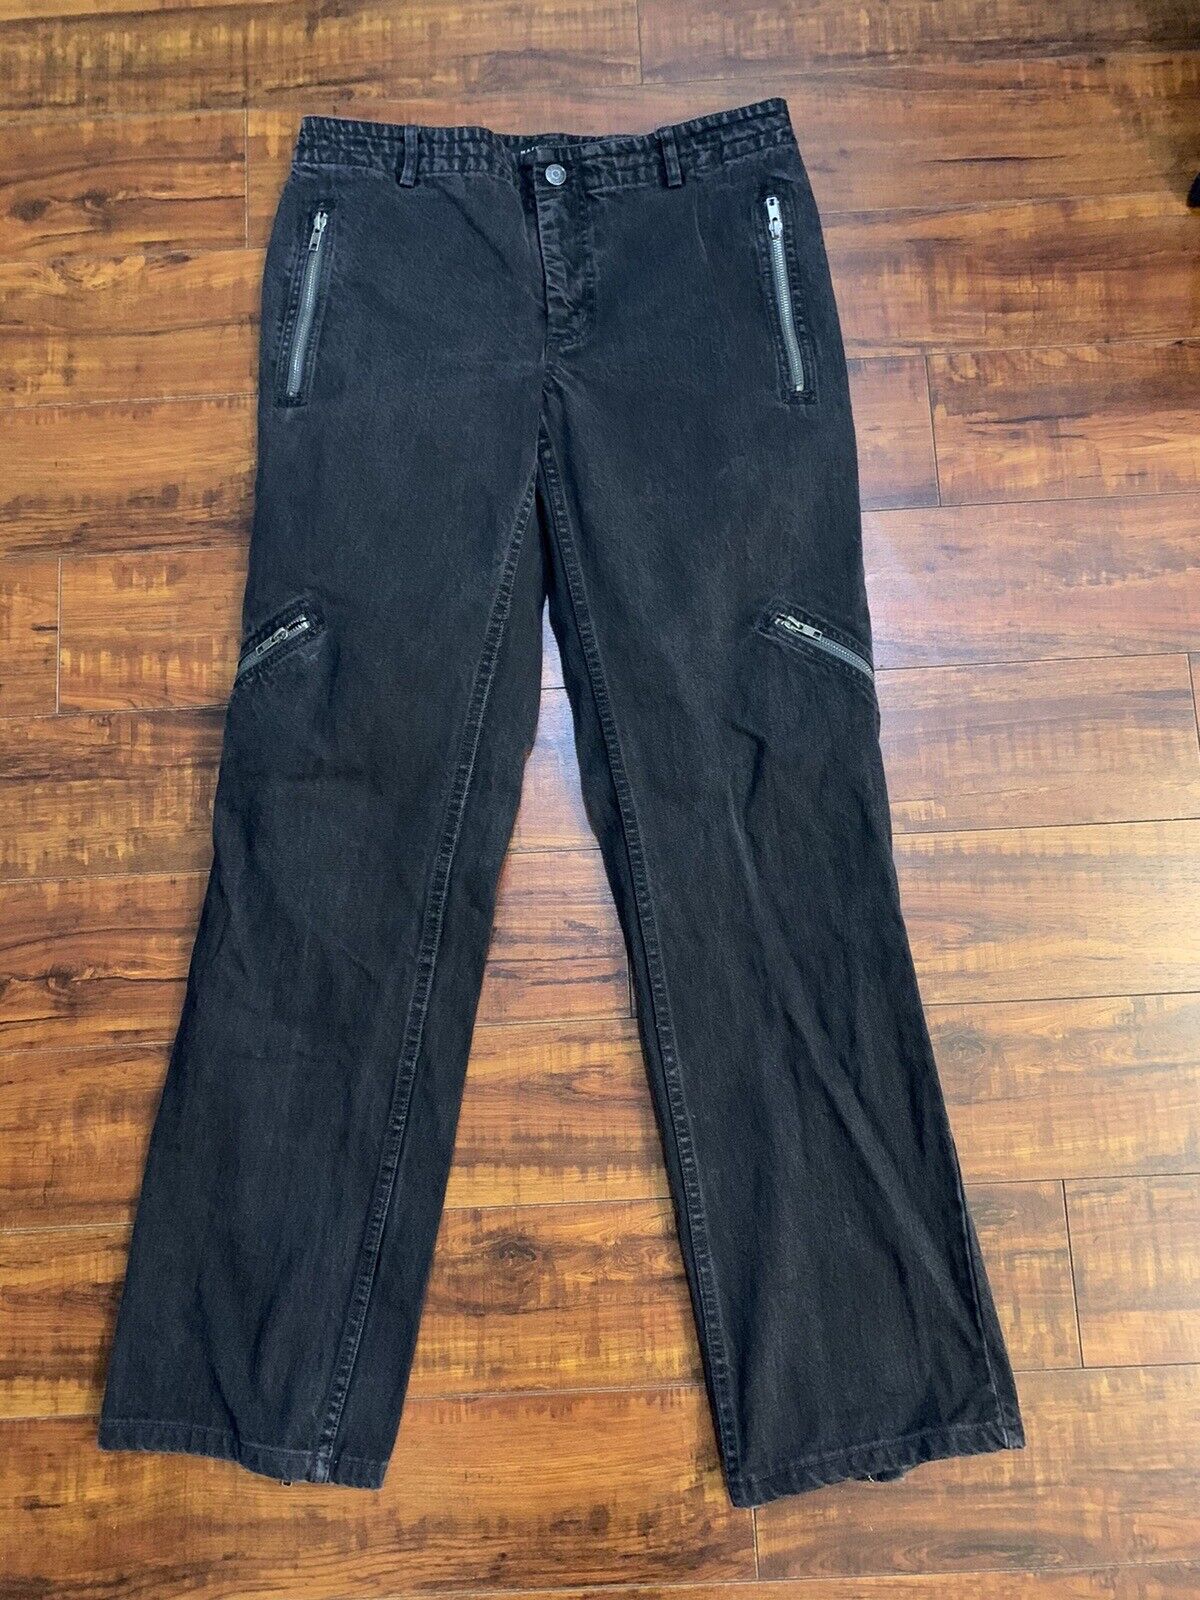 Vintage Jacobs By Marc Jacobs Mens 32x34 Black Denim Jeans Zip Pockets Grunge